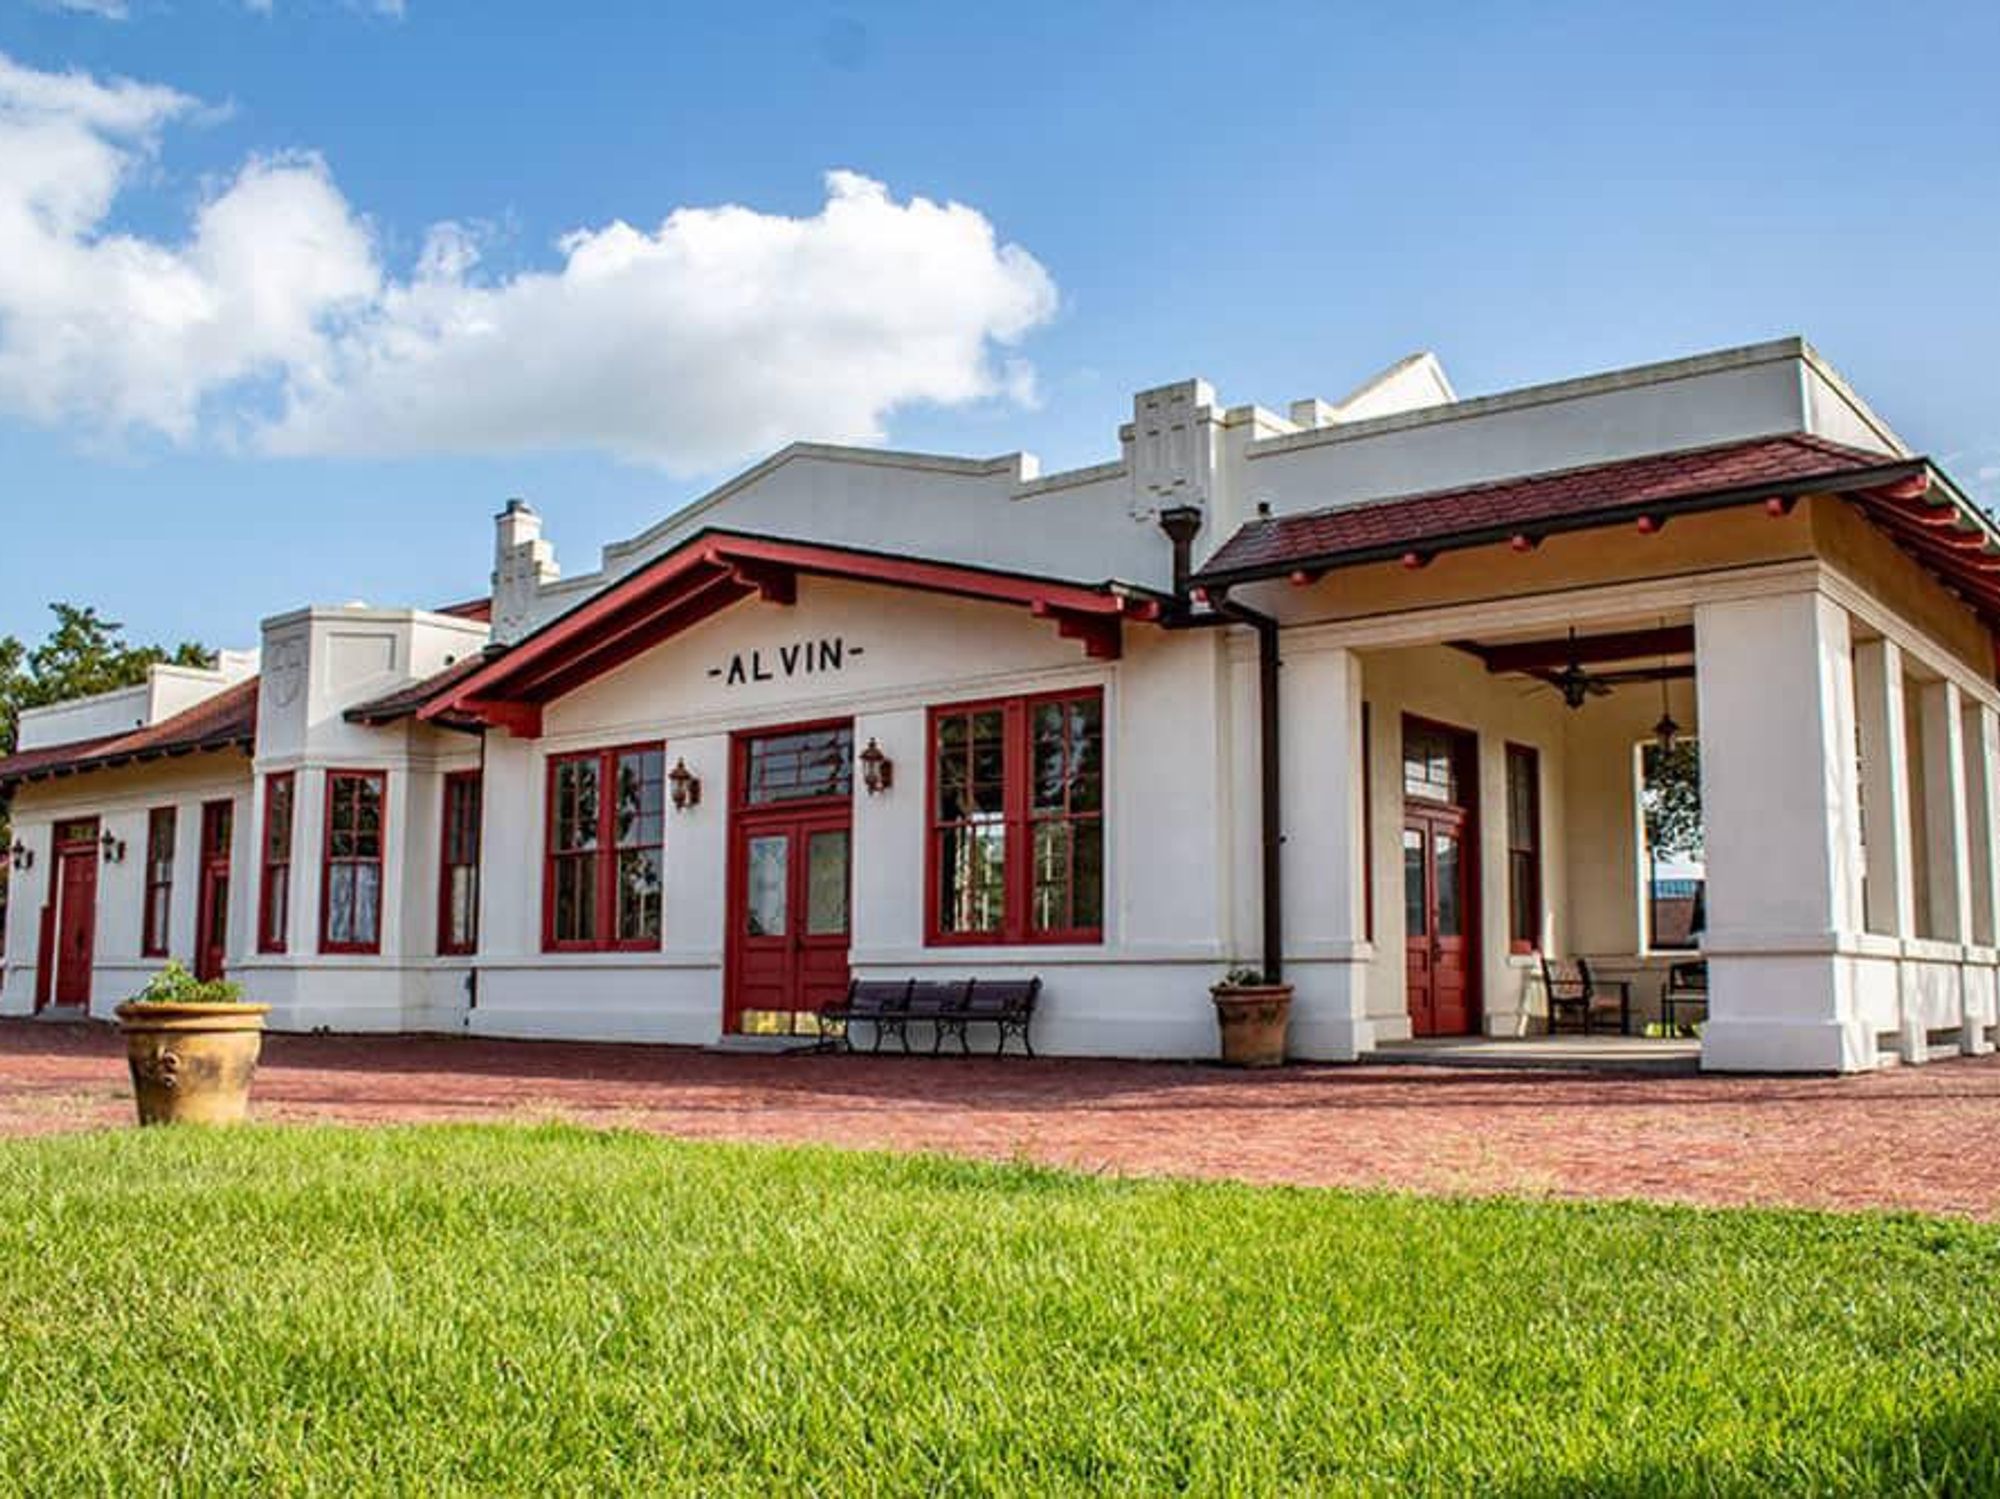 alvin historic train depot